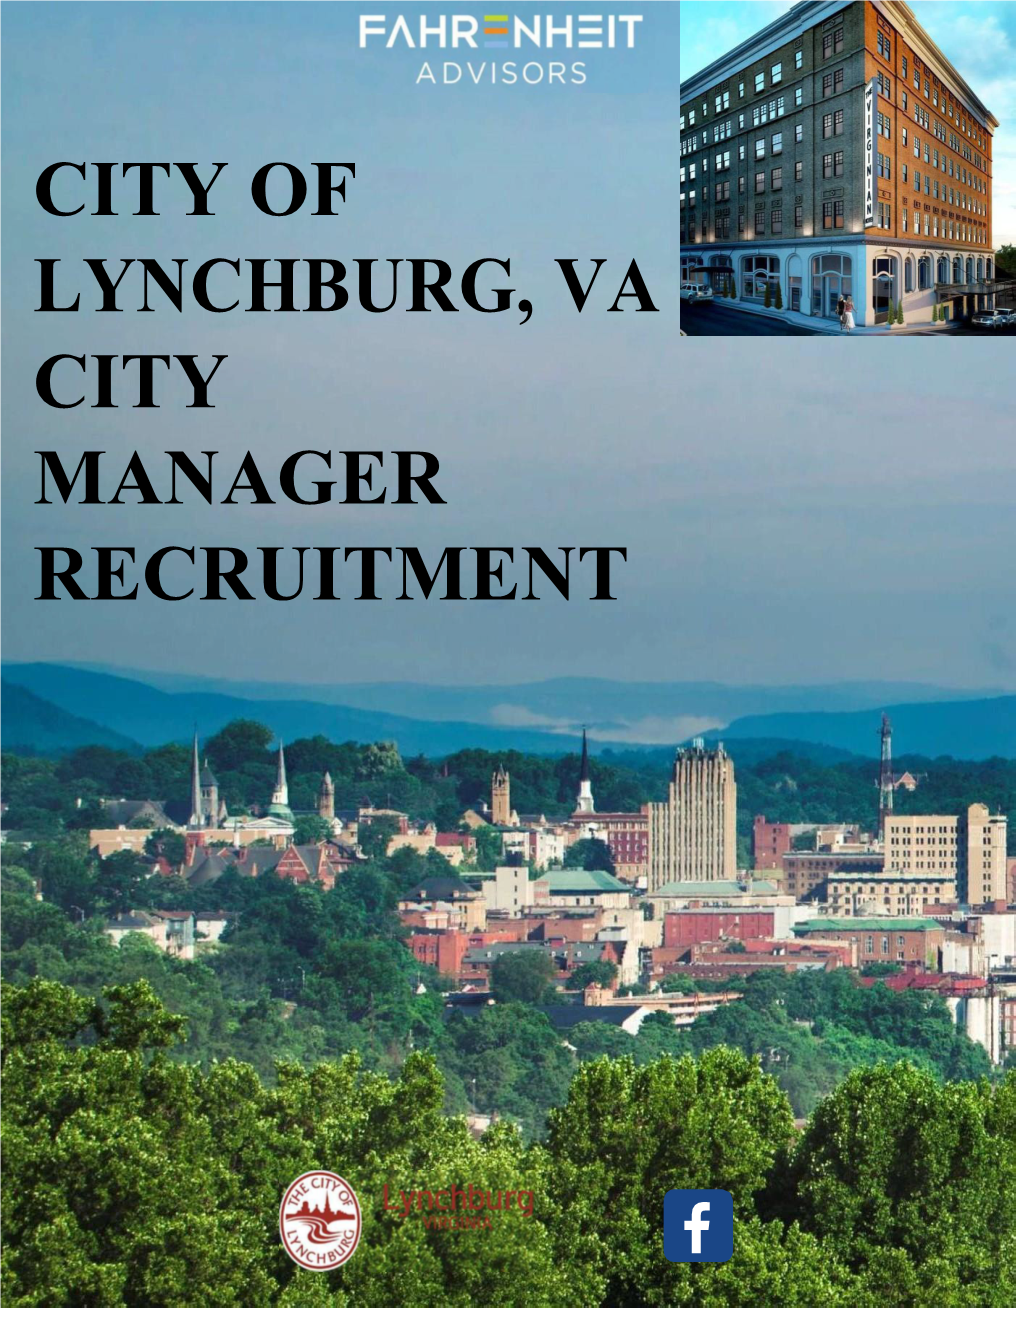 City of Lynchburg, Va City Manager Recruitment